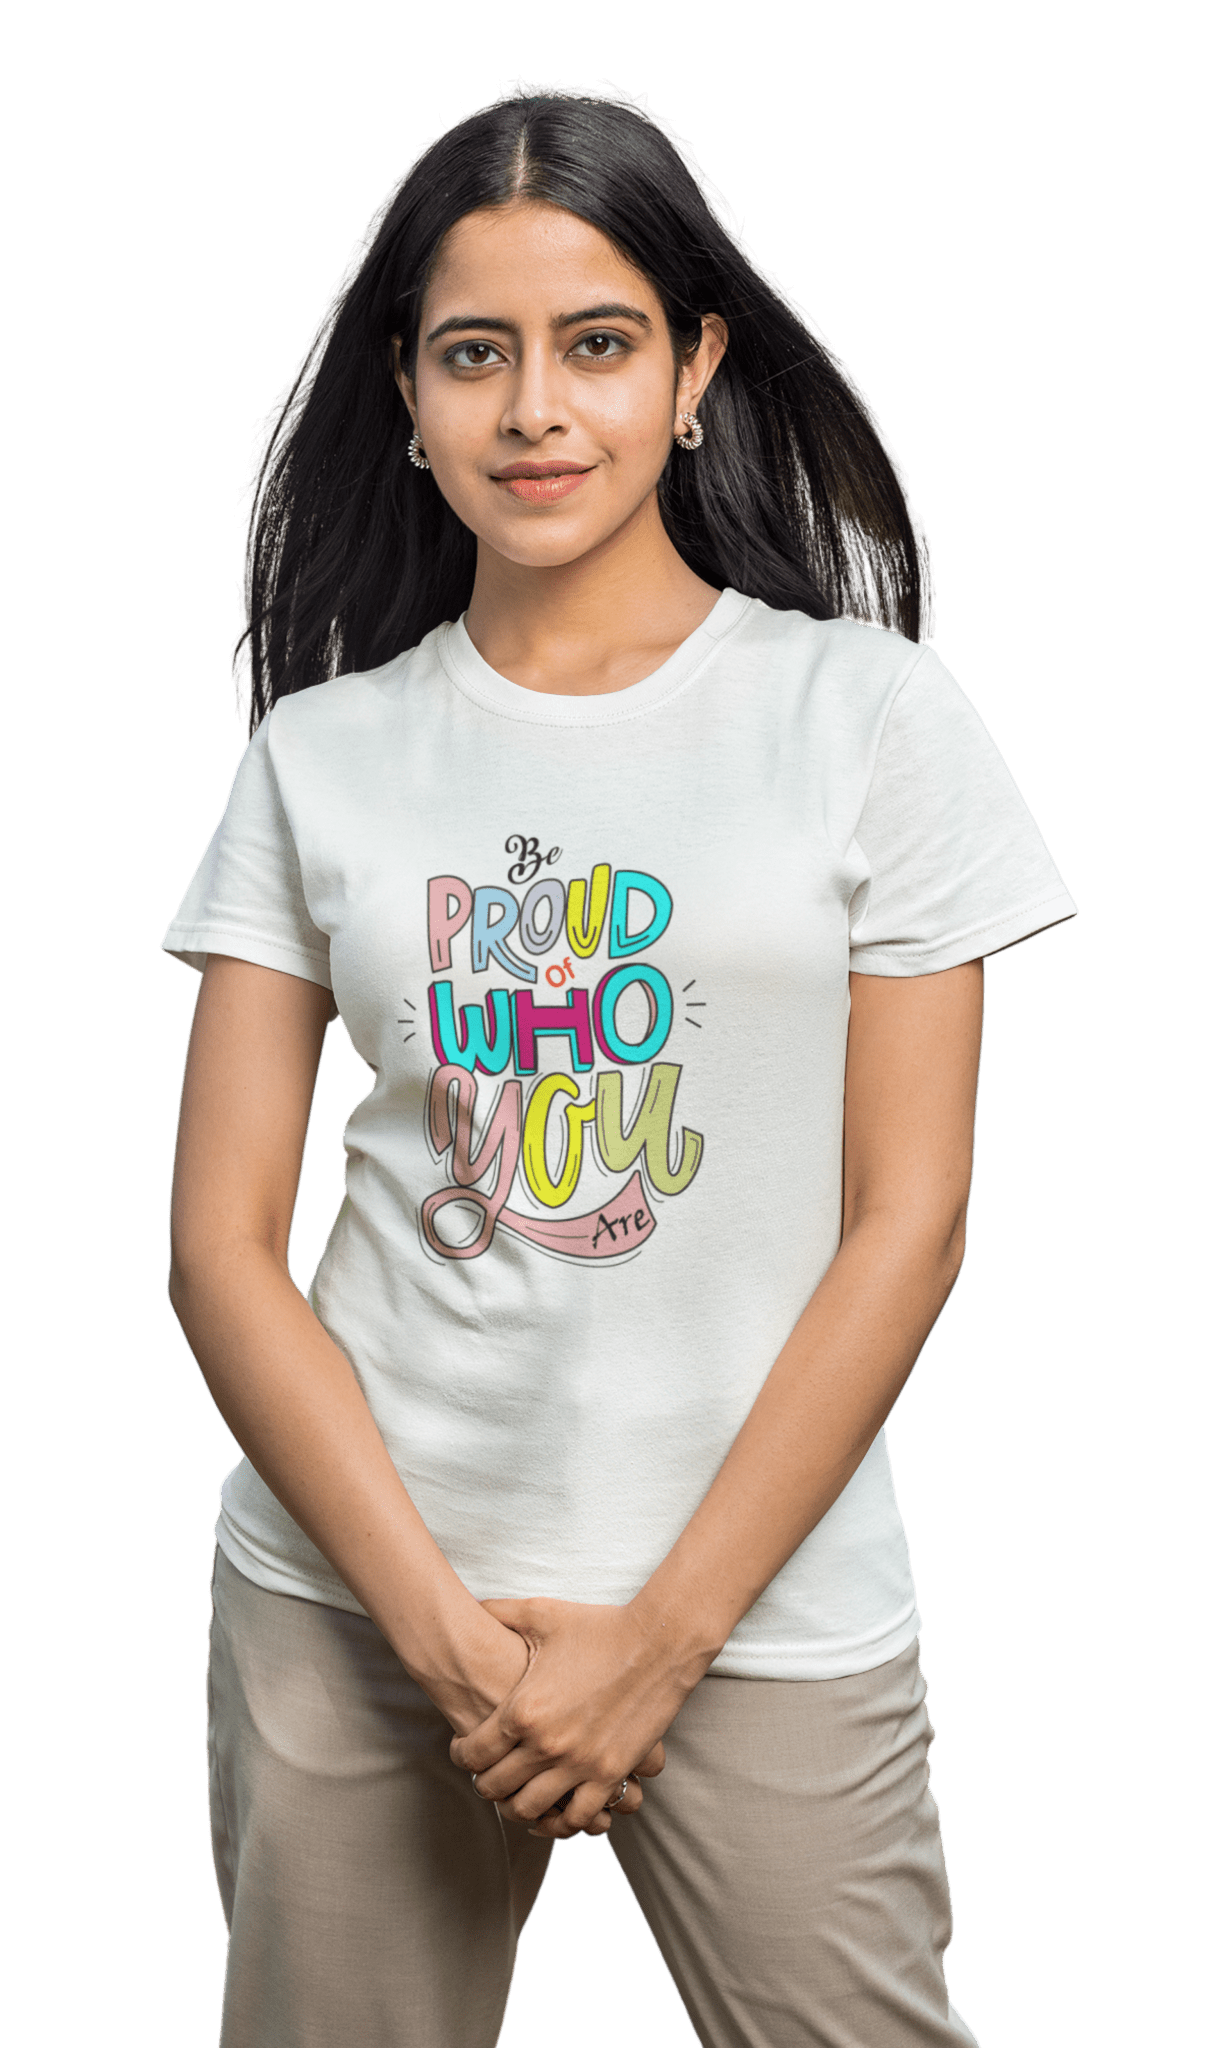 Be Proud Regular Women's T-Shirt - Hush and Wear